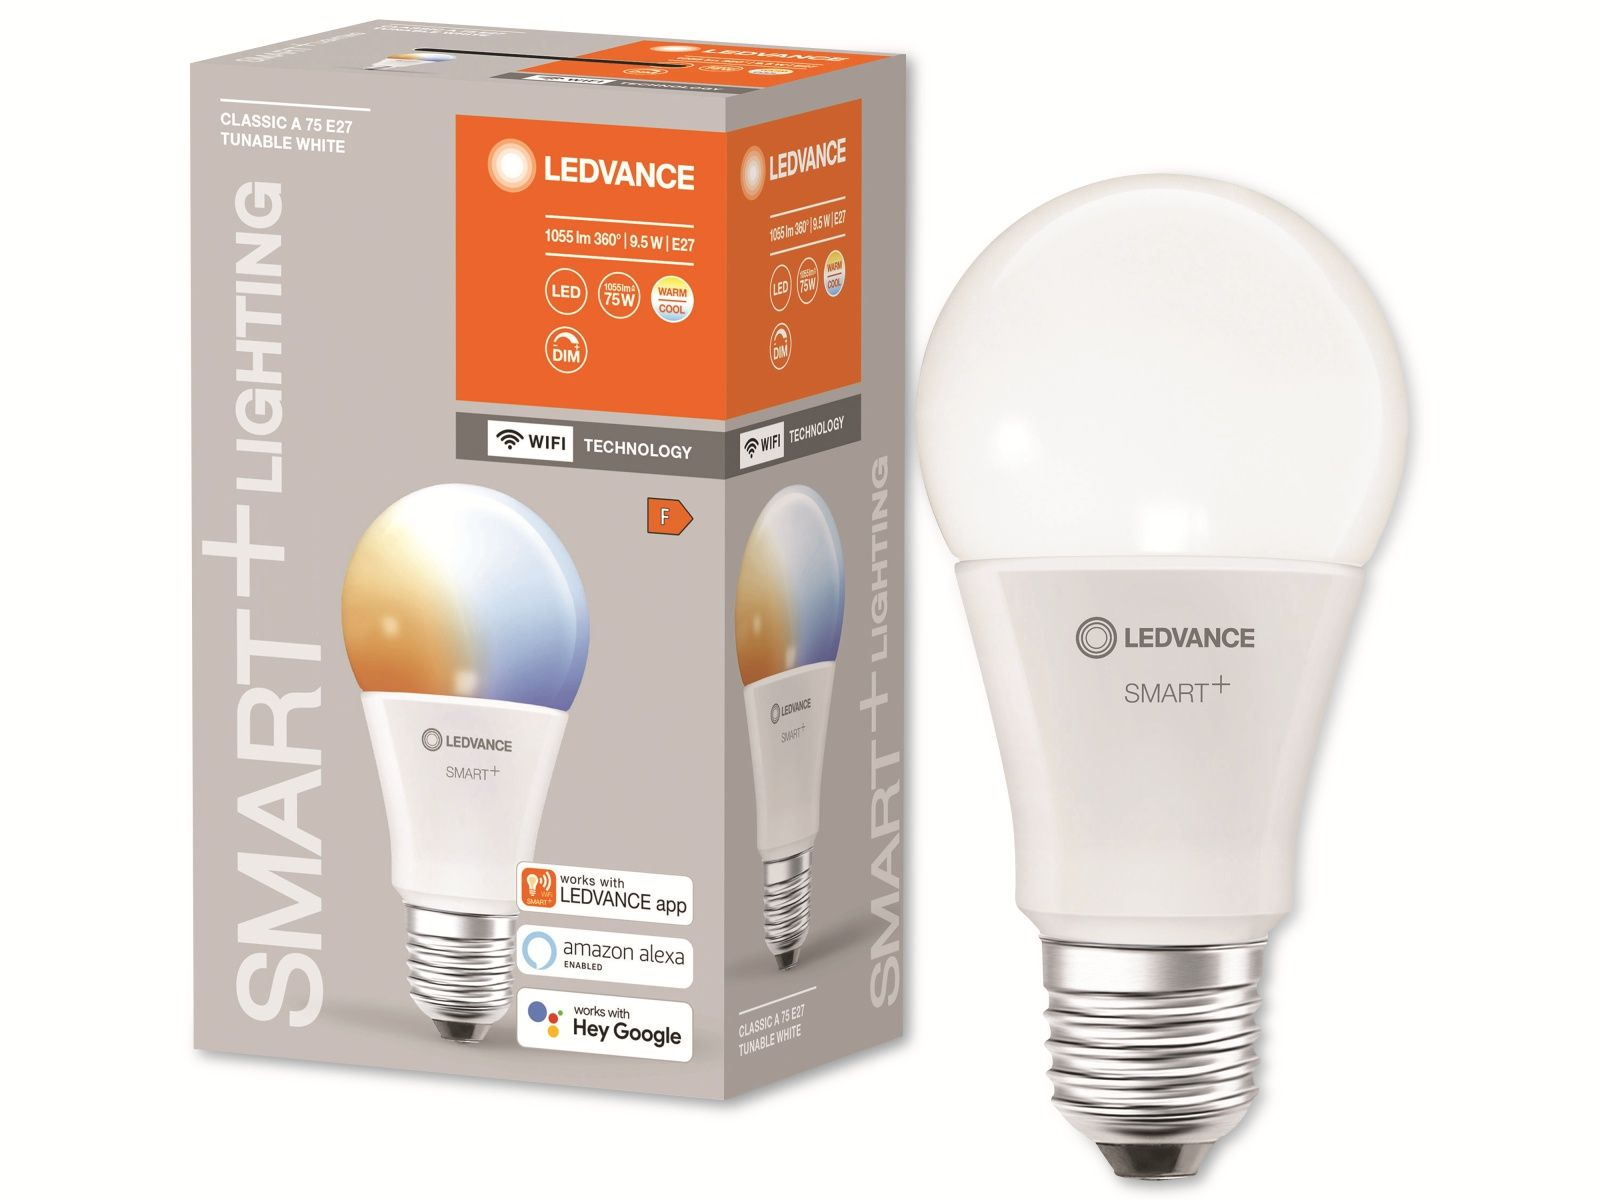 White Classic LED LEDVANCE WiFi Lampe SMART+ änderbar Lichtfarbe Tunable